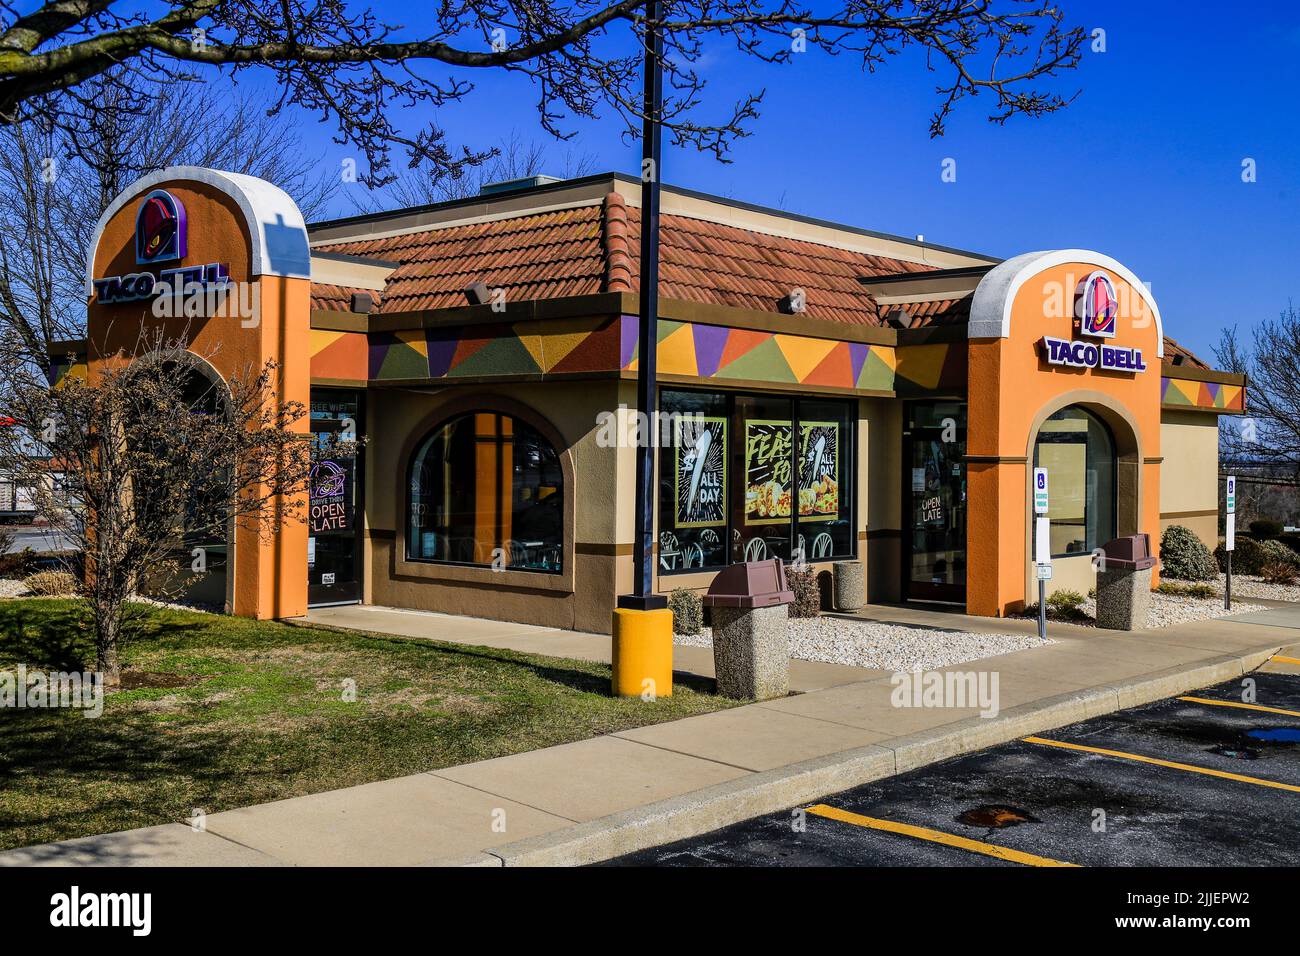 Williston Square latest: Sanford, Taco Bell, and Pizza Ranch